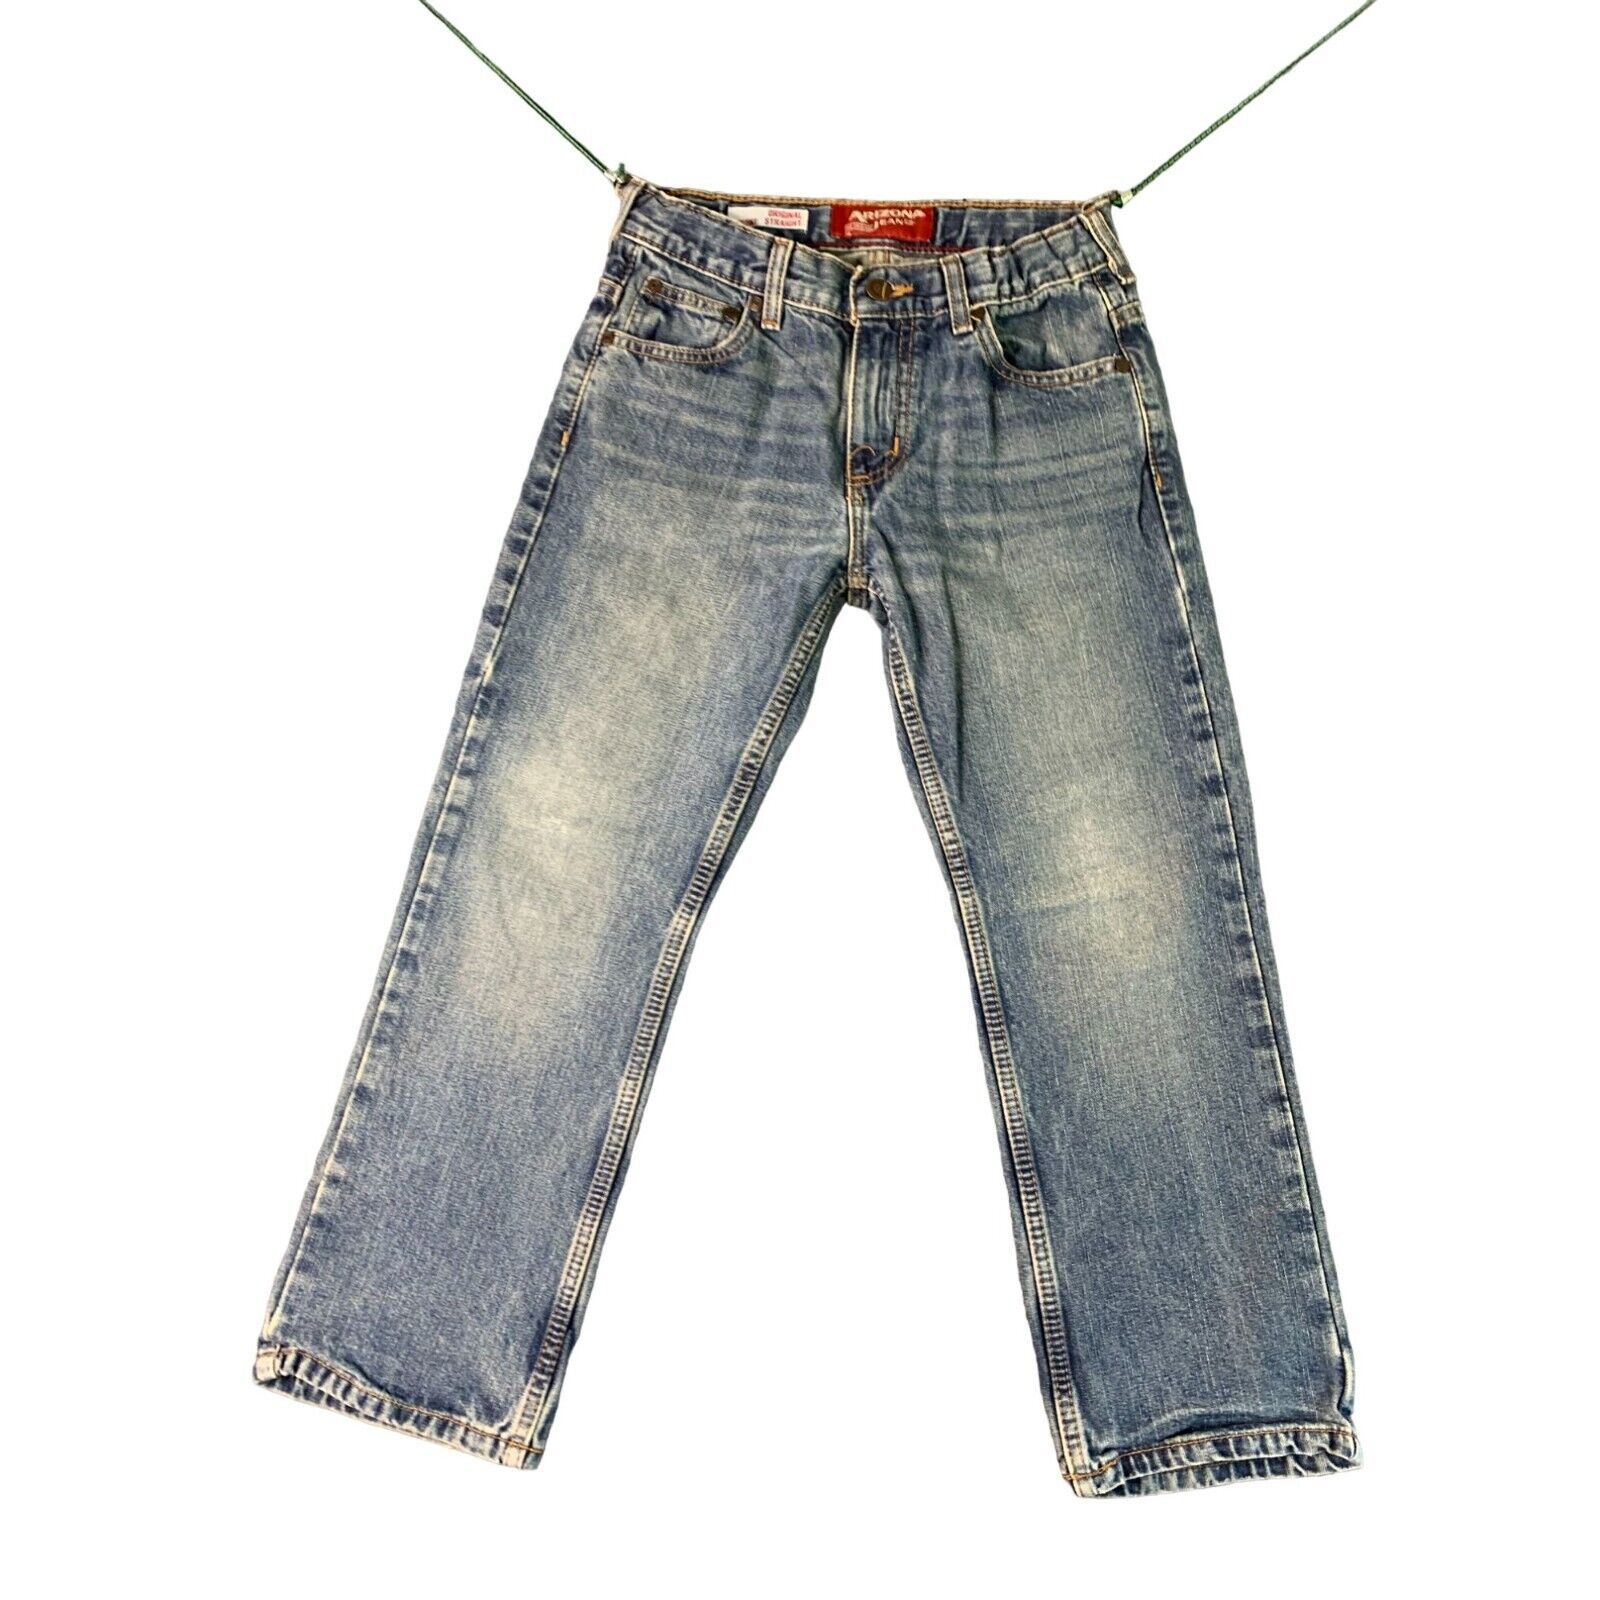 Primary image for Arizona Jean Boys Size 8 Husky Original Fit Straight Leg Jeans Blue Denim